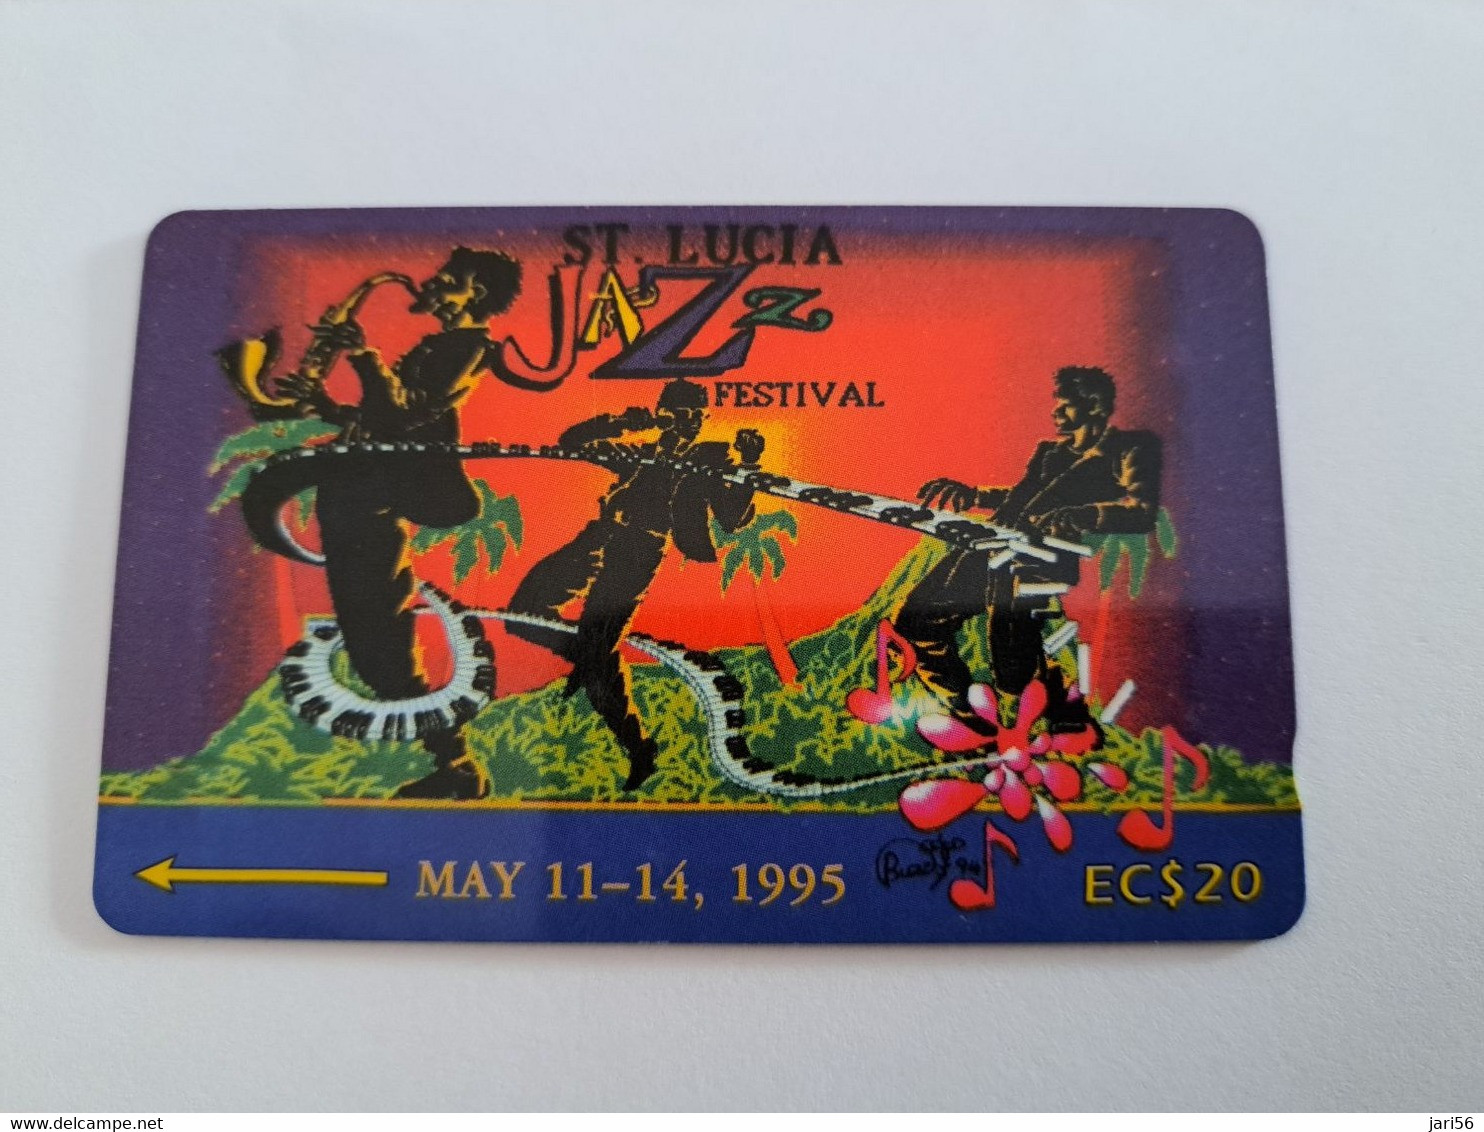 ST LUCIA    $ 20   CABLE & WIRELESS  STL-19A  19CSLA      JAZZ FESTIVAL 1995  Fine Used Card ** 10880** - Sainte Lucie